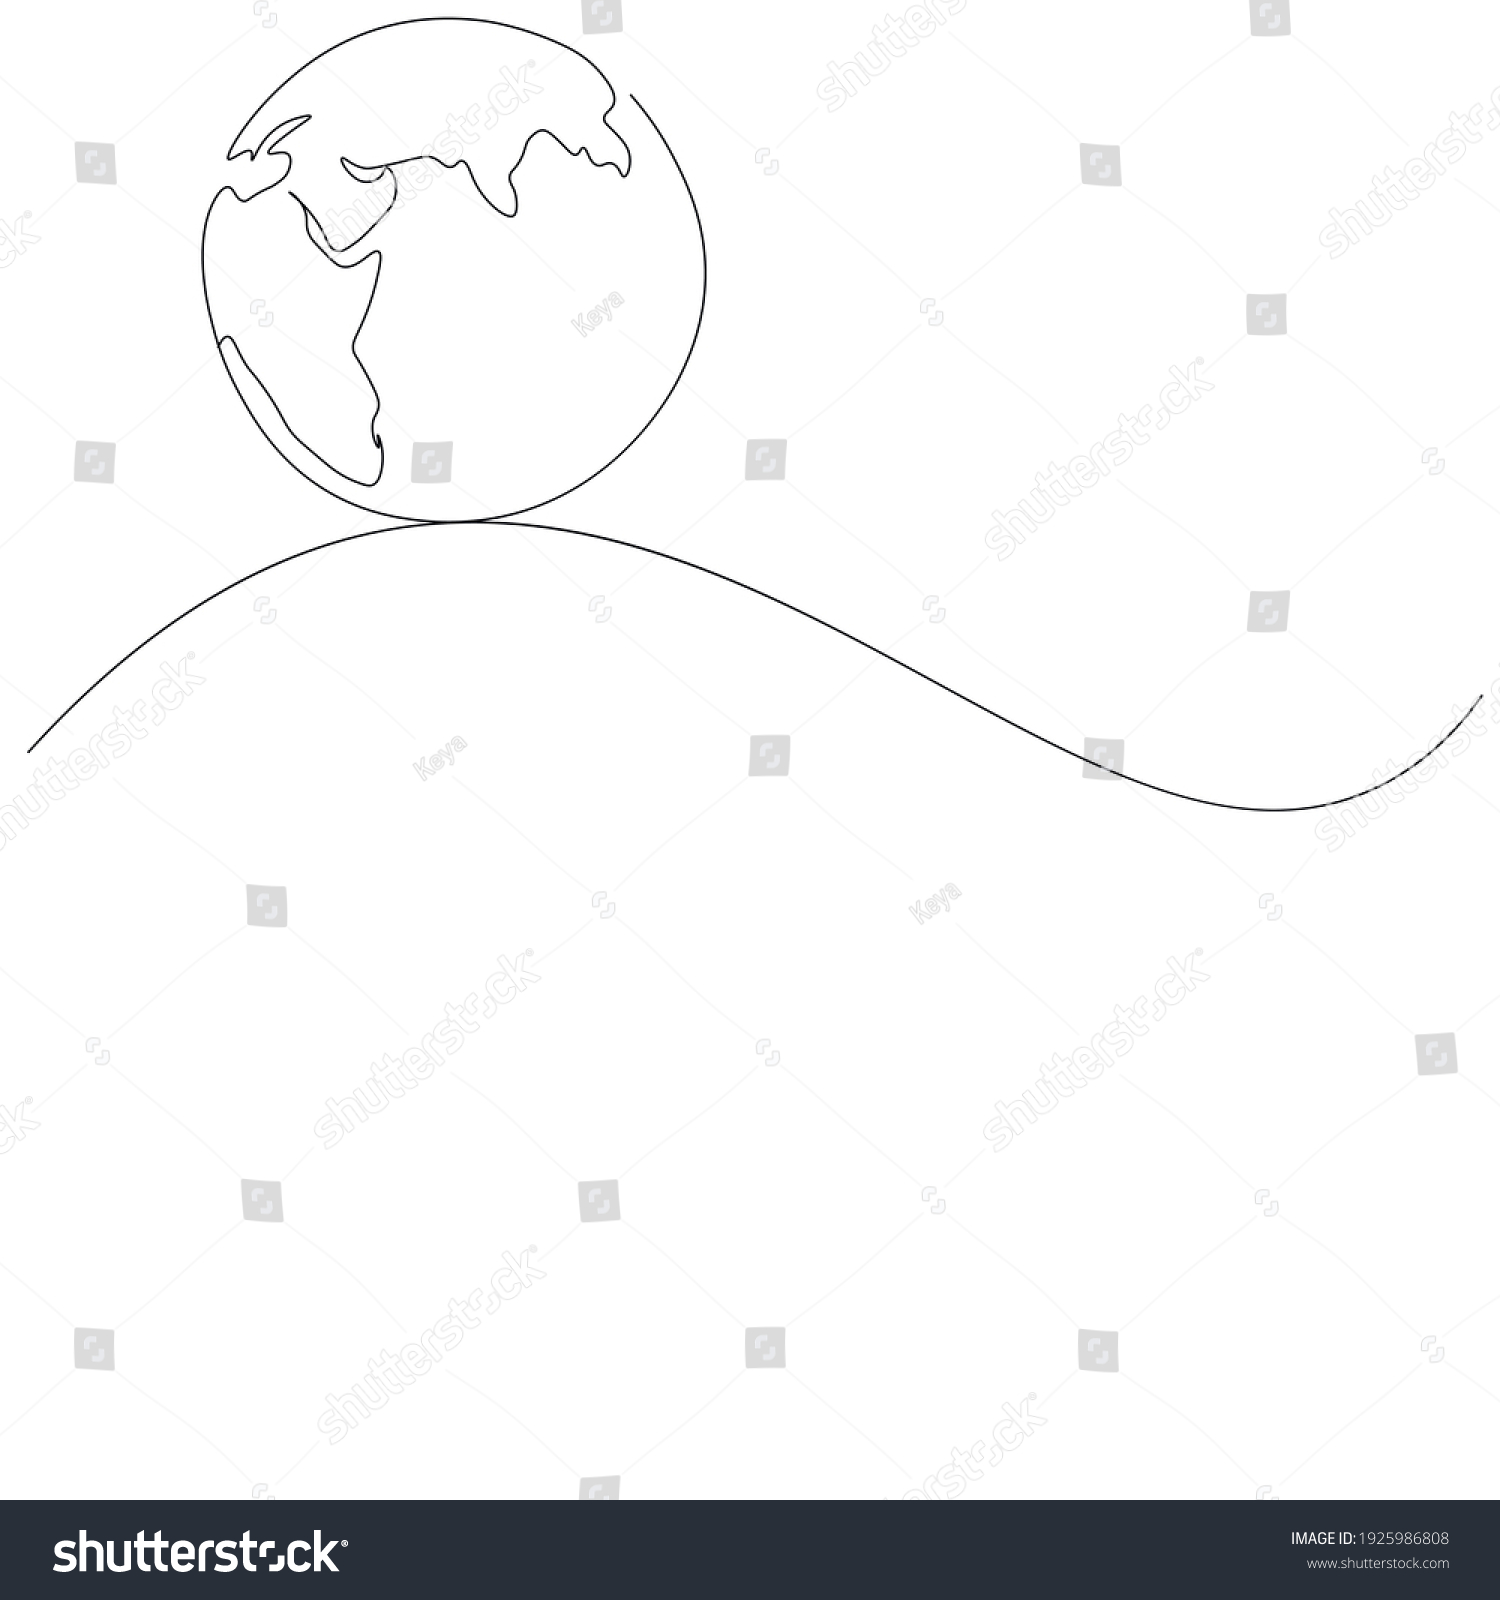 World Globe Line Drawing Vector Illustration Stock Vector Royalty Free